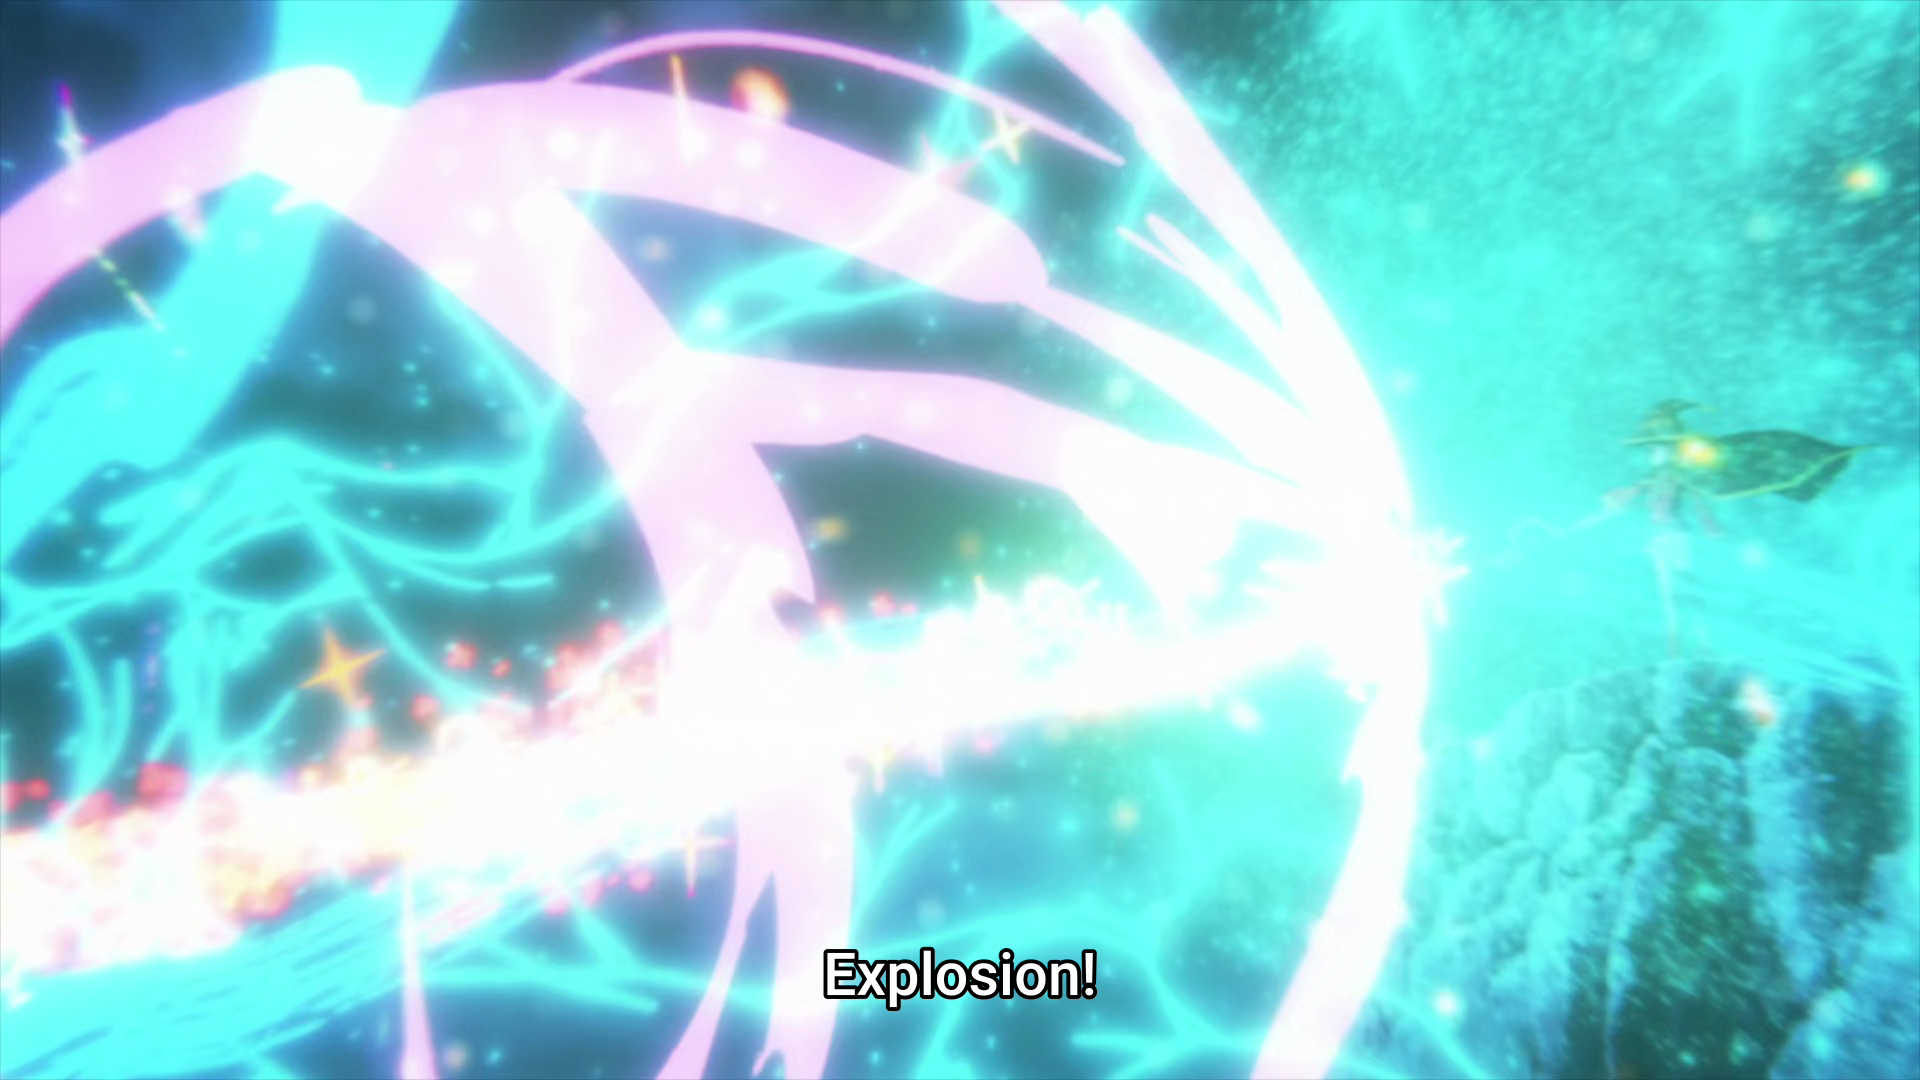 Megumin shouting EXPLOSION! making explosion